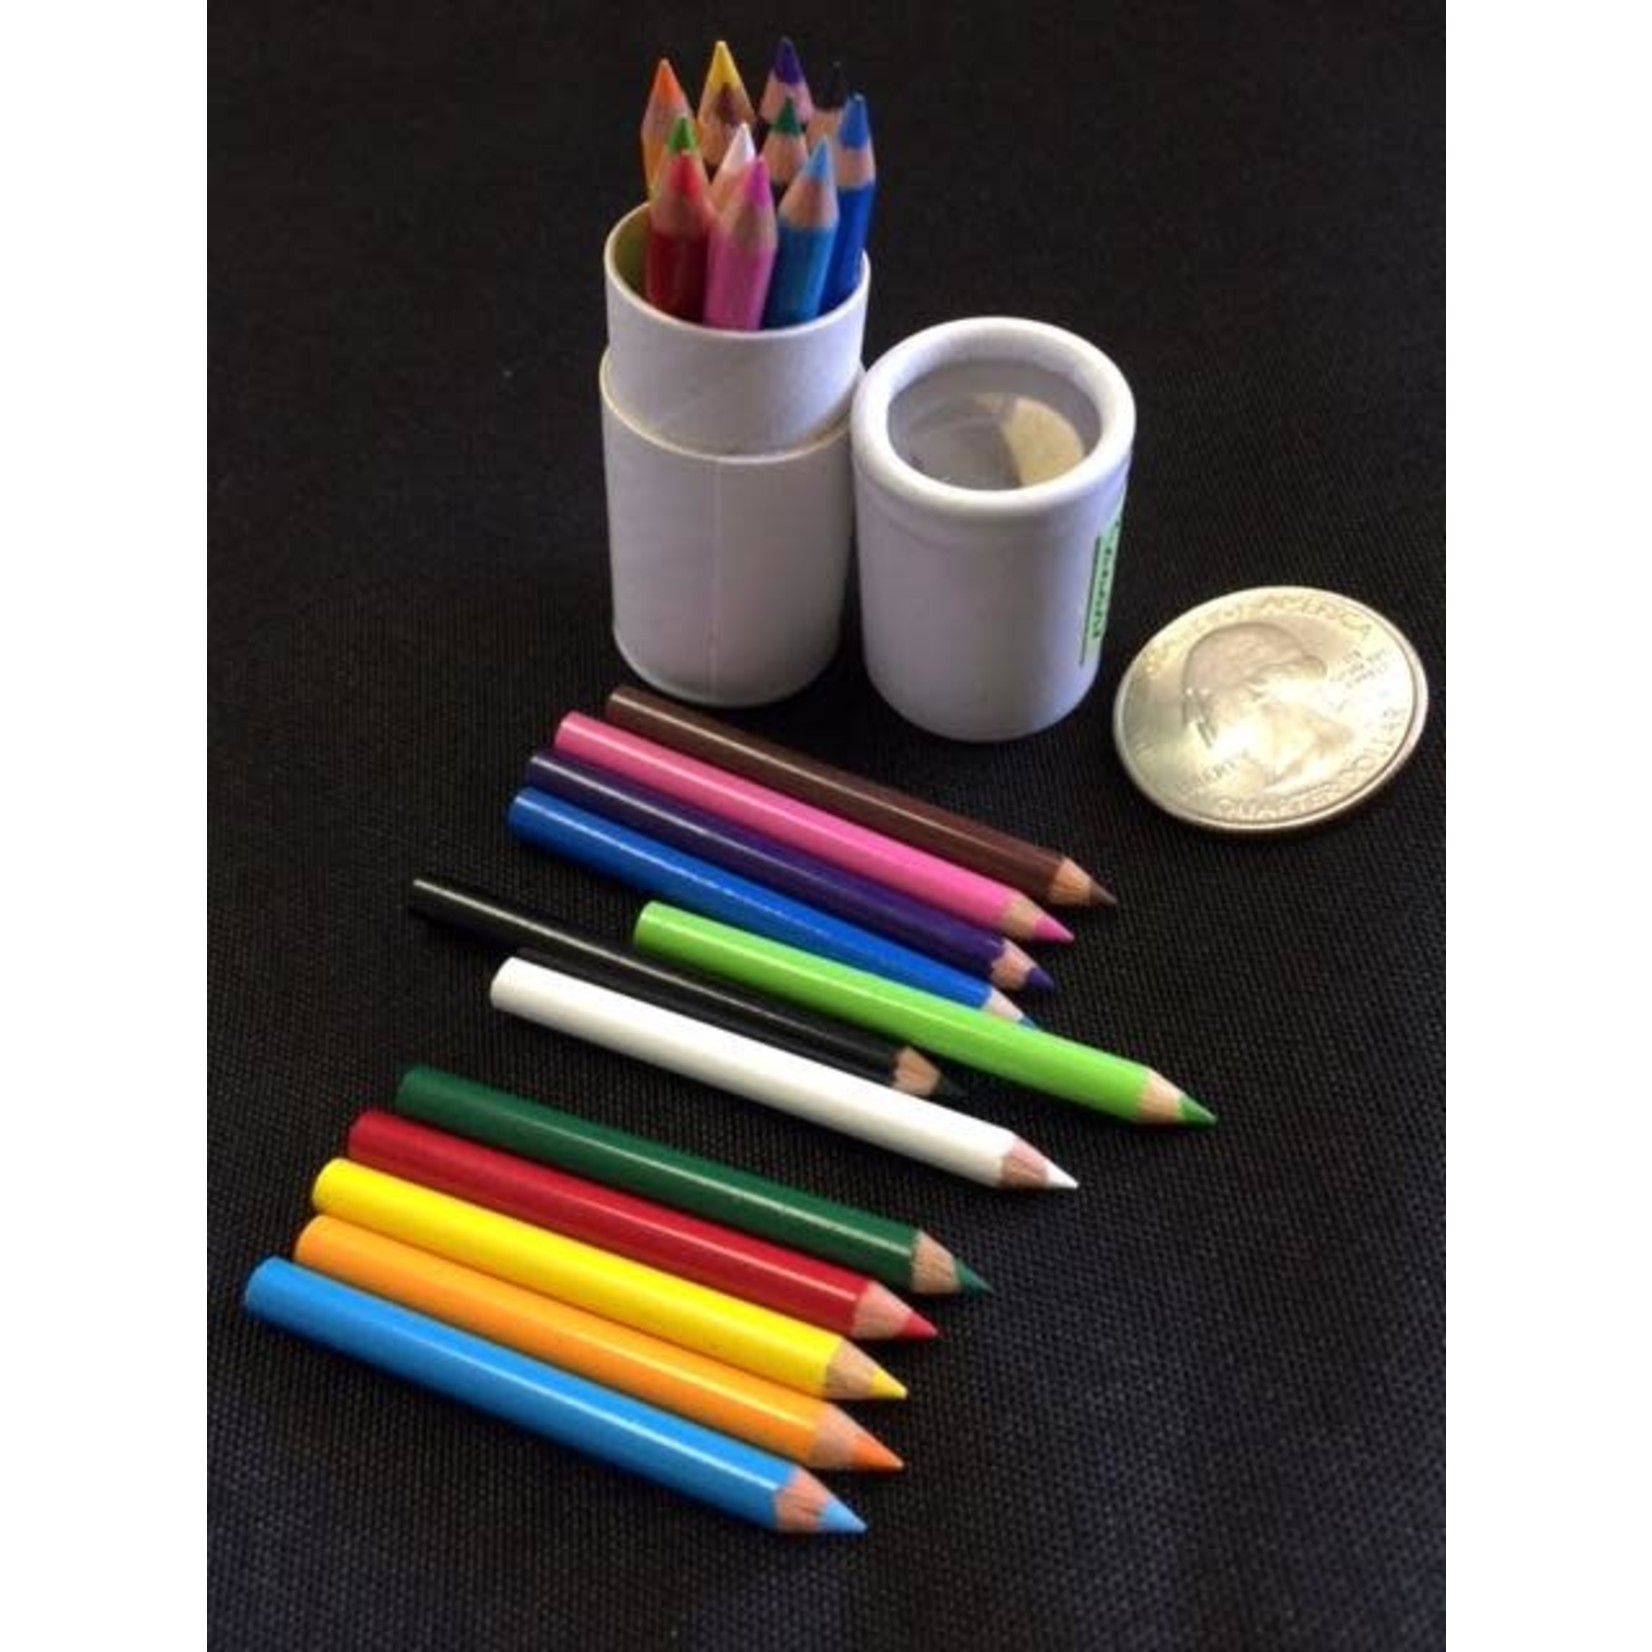 BeGoody Japan 12 mini color pencils in plastic card case - 22134